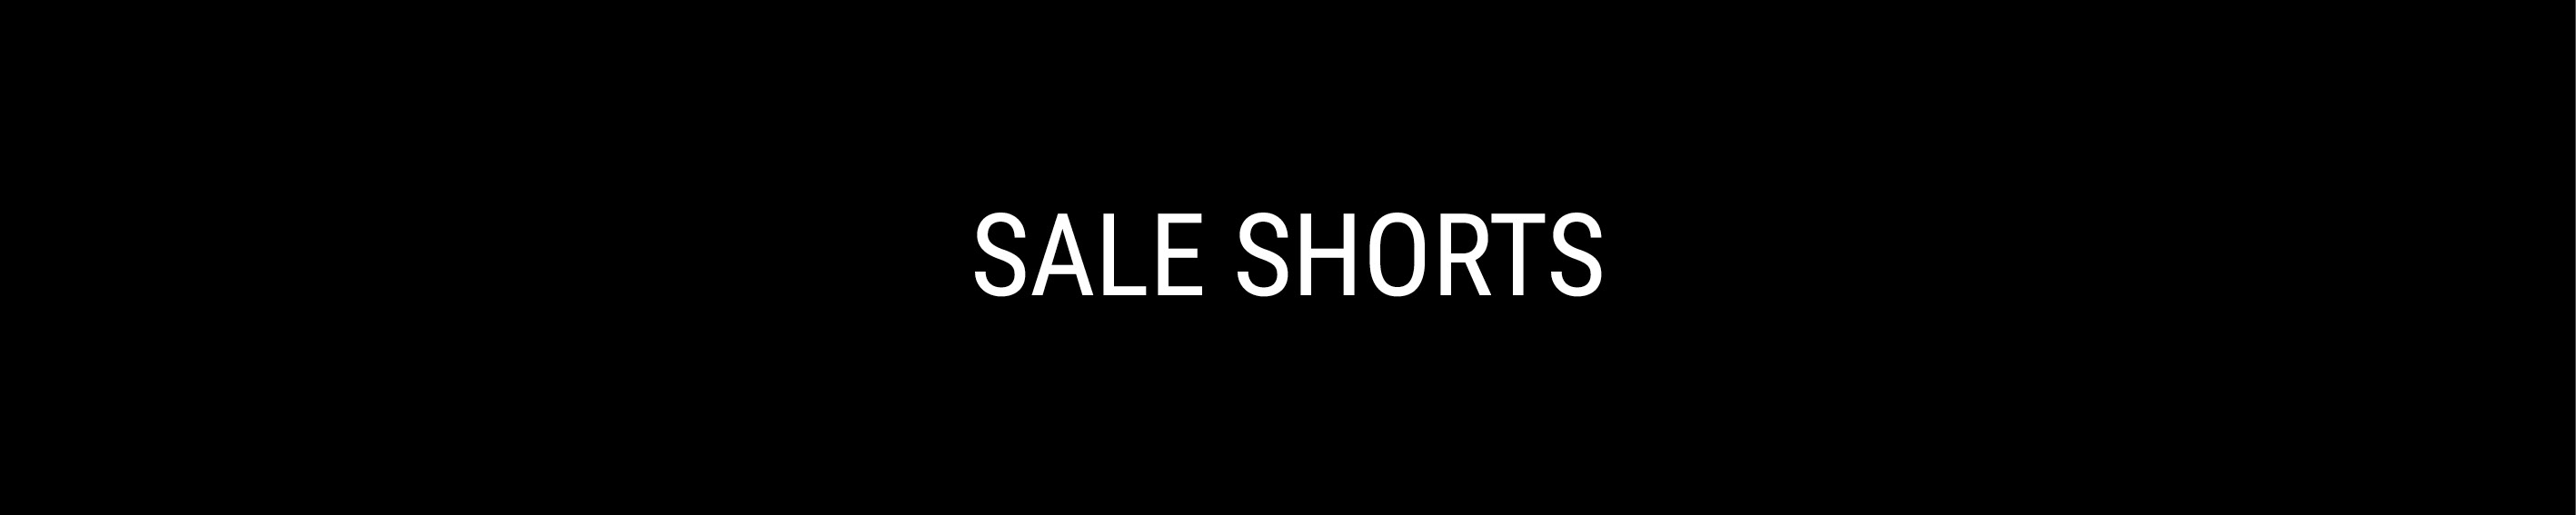 Biker Shorts Discount on Sale